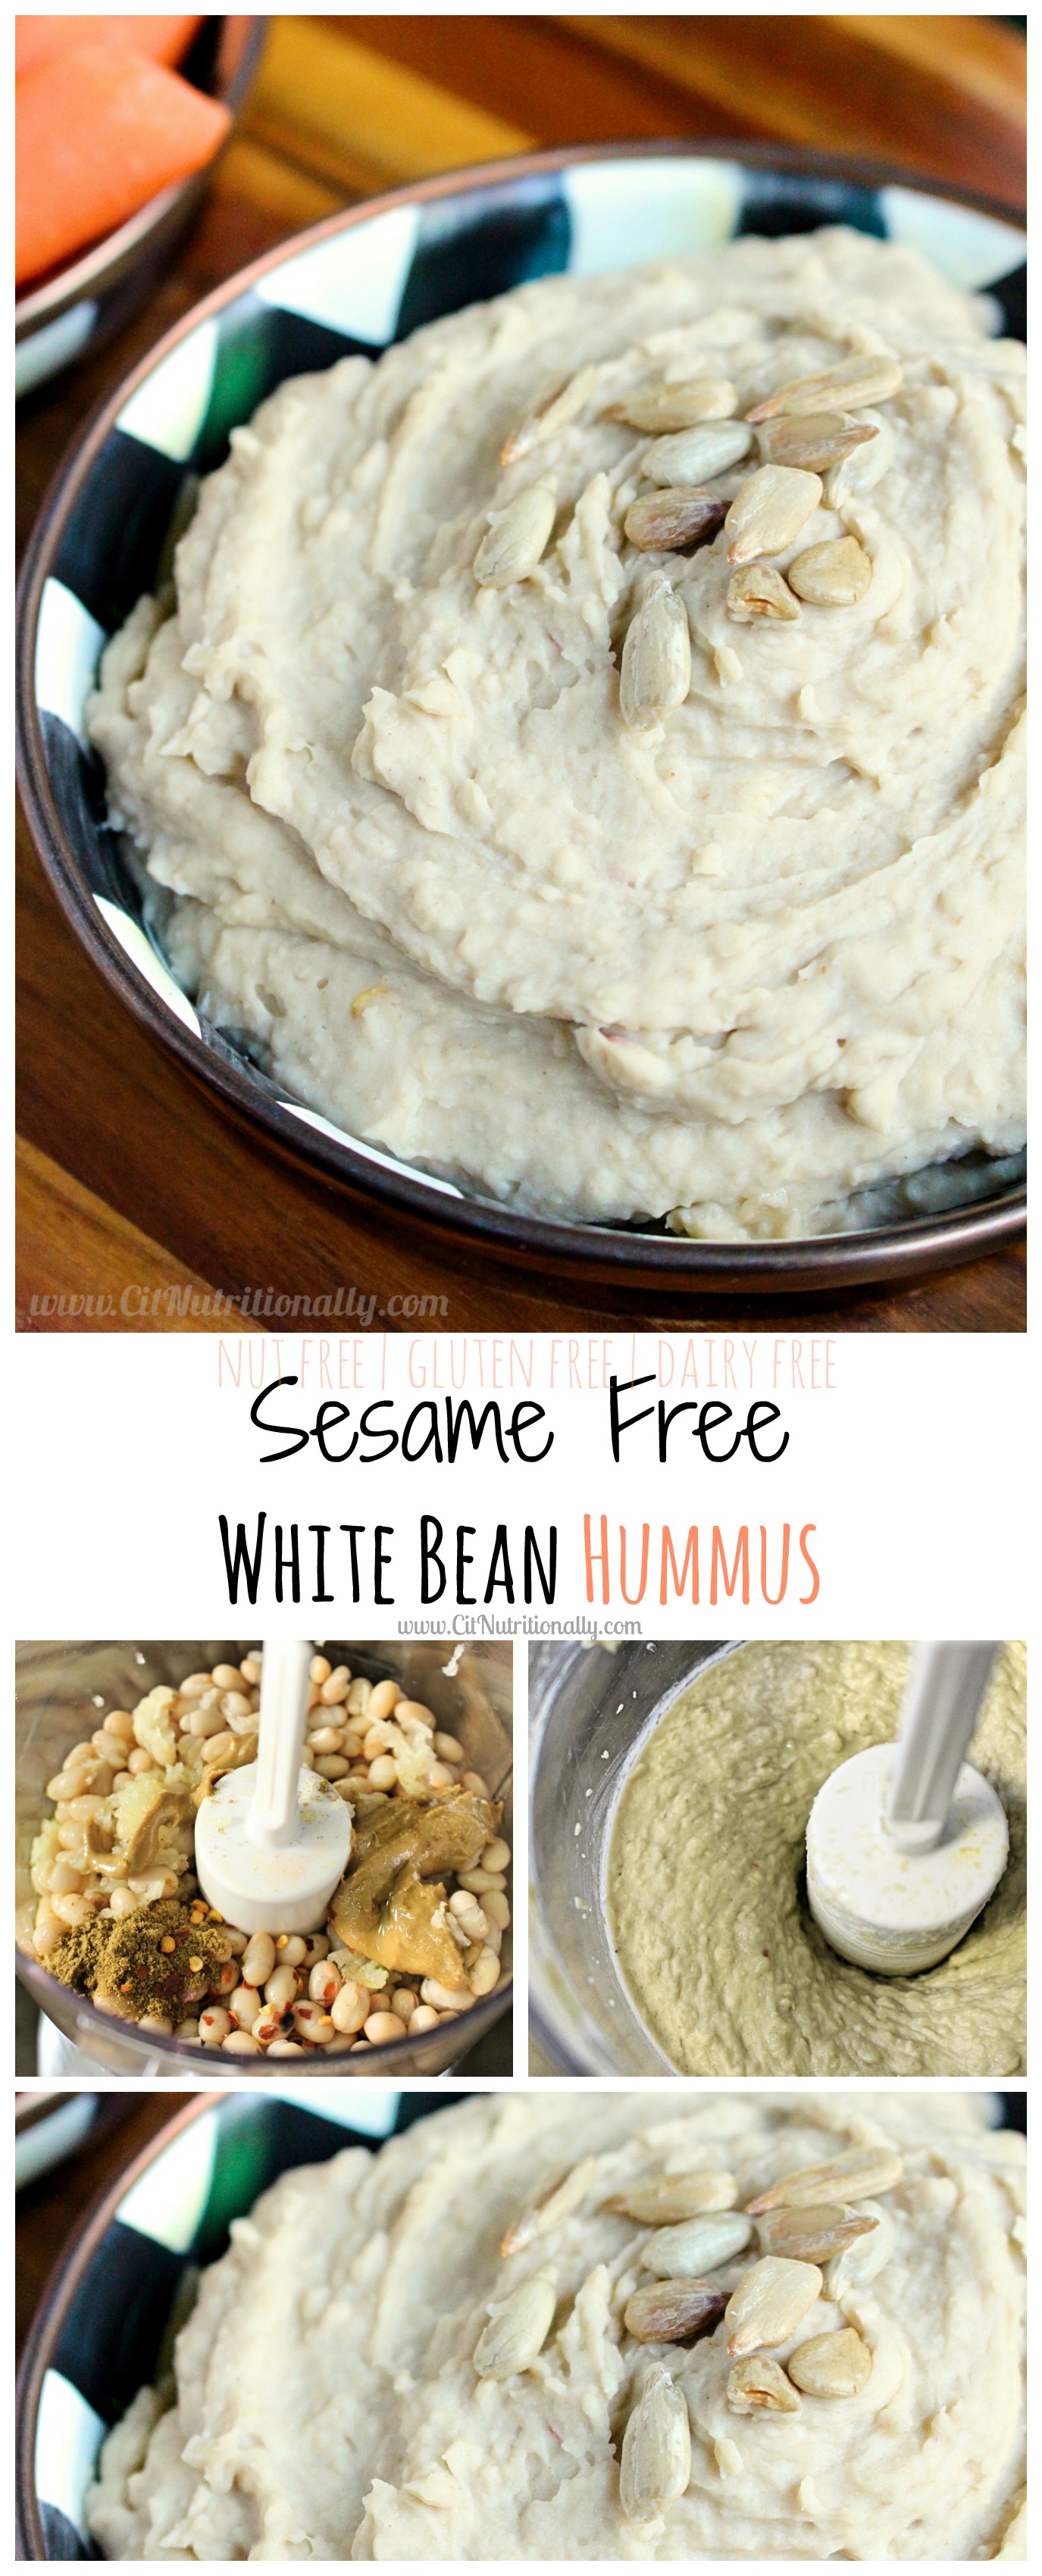 Sesame Free White Bean Hummus | C it Nutritionally